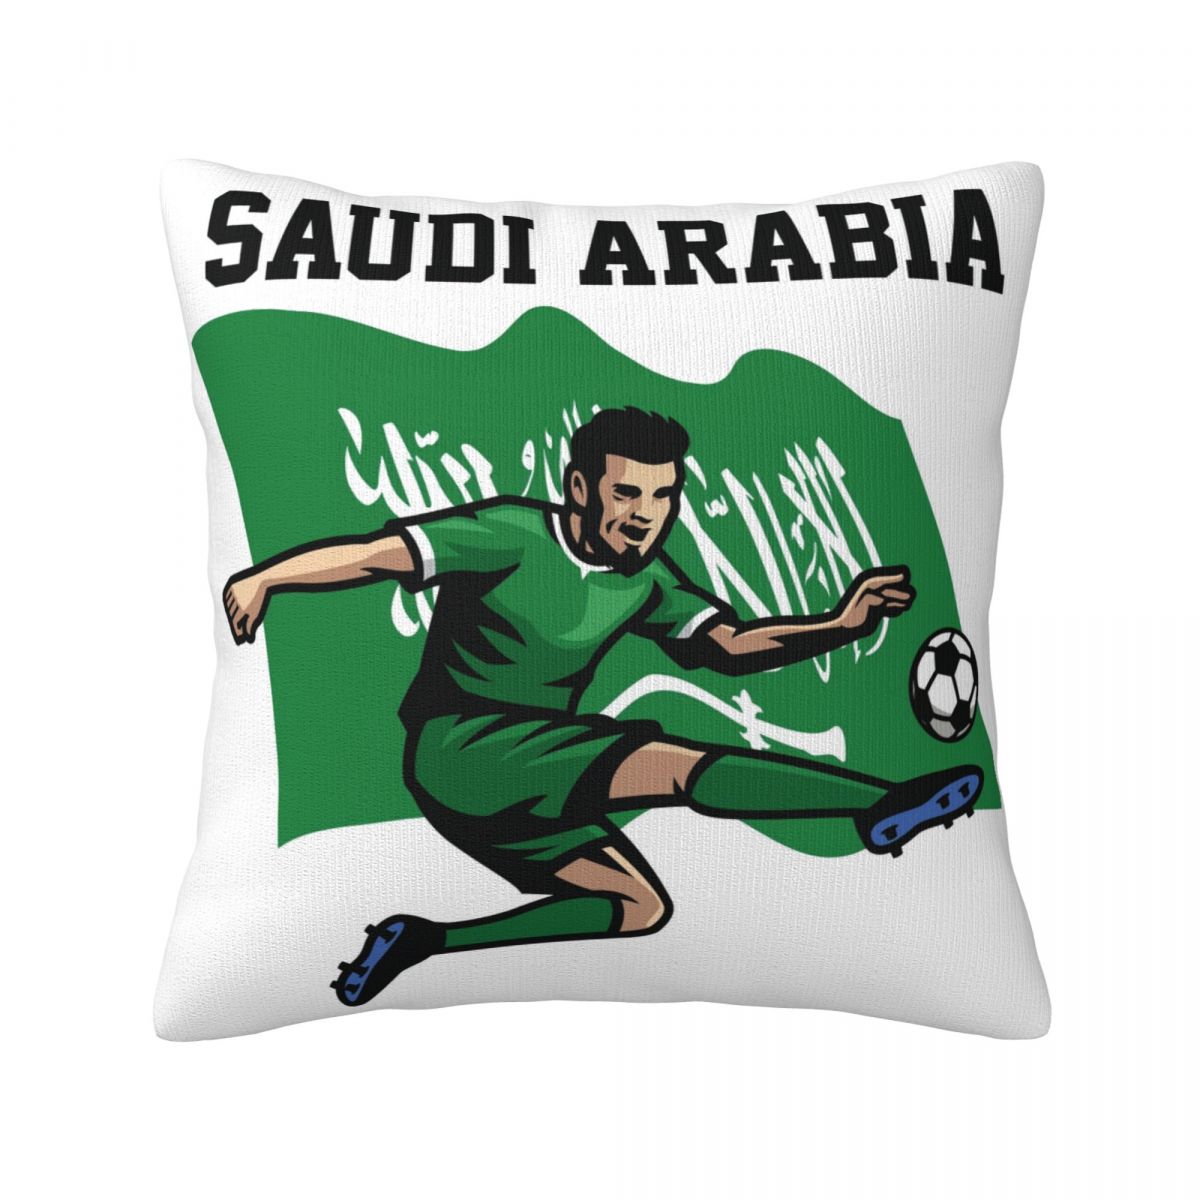 Saudi Arabia Soccer Player Decorative Square Throw Pillow Covers